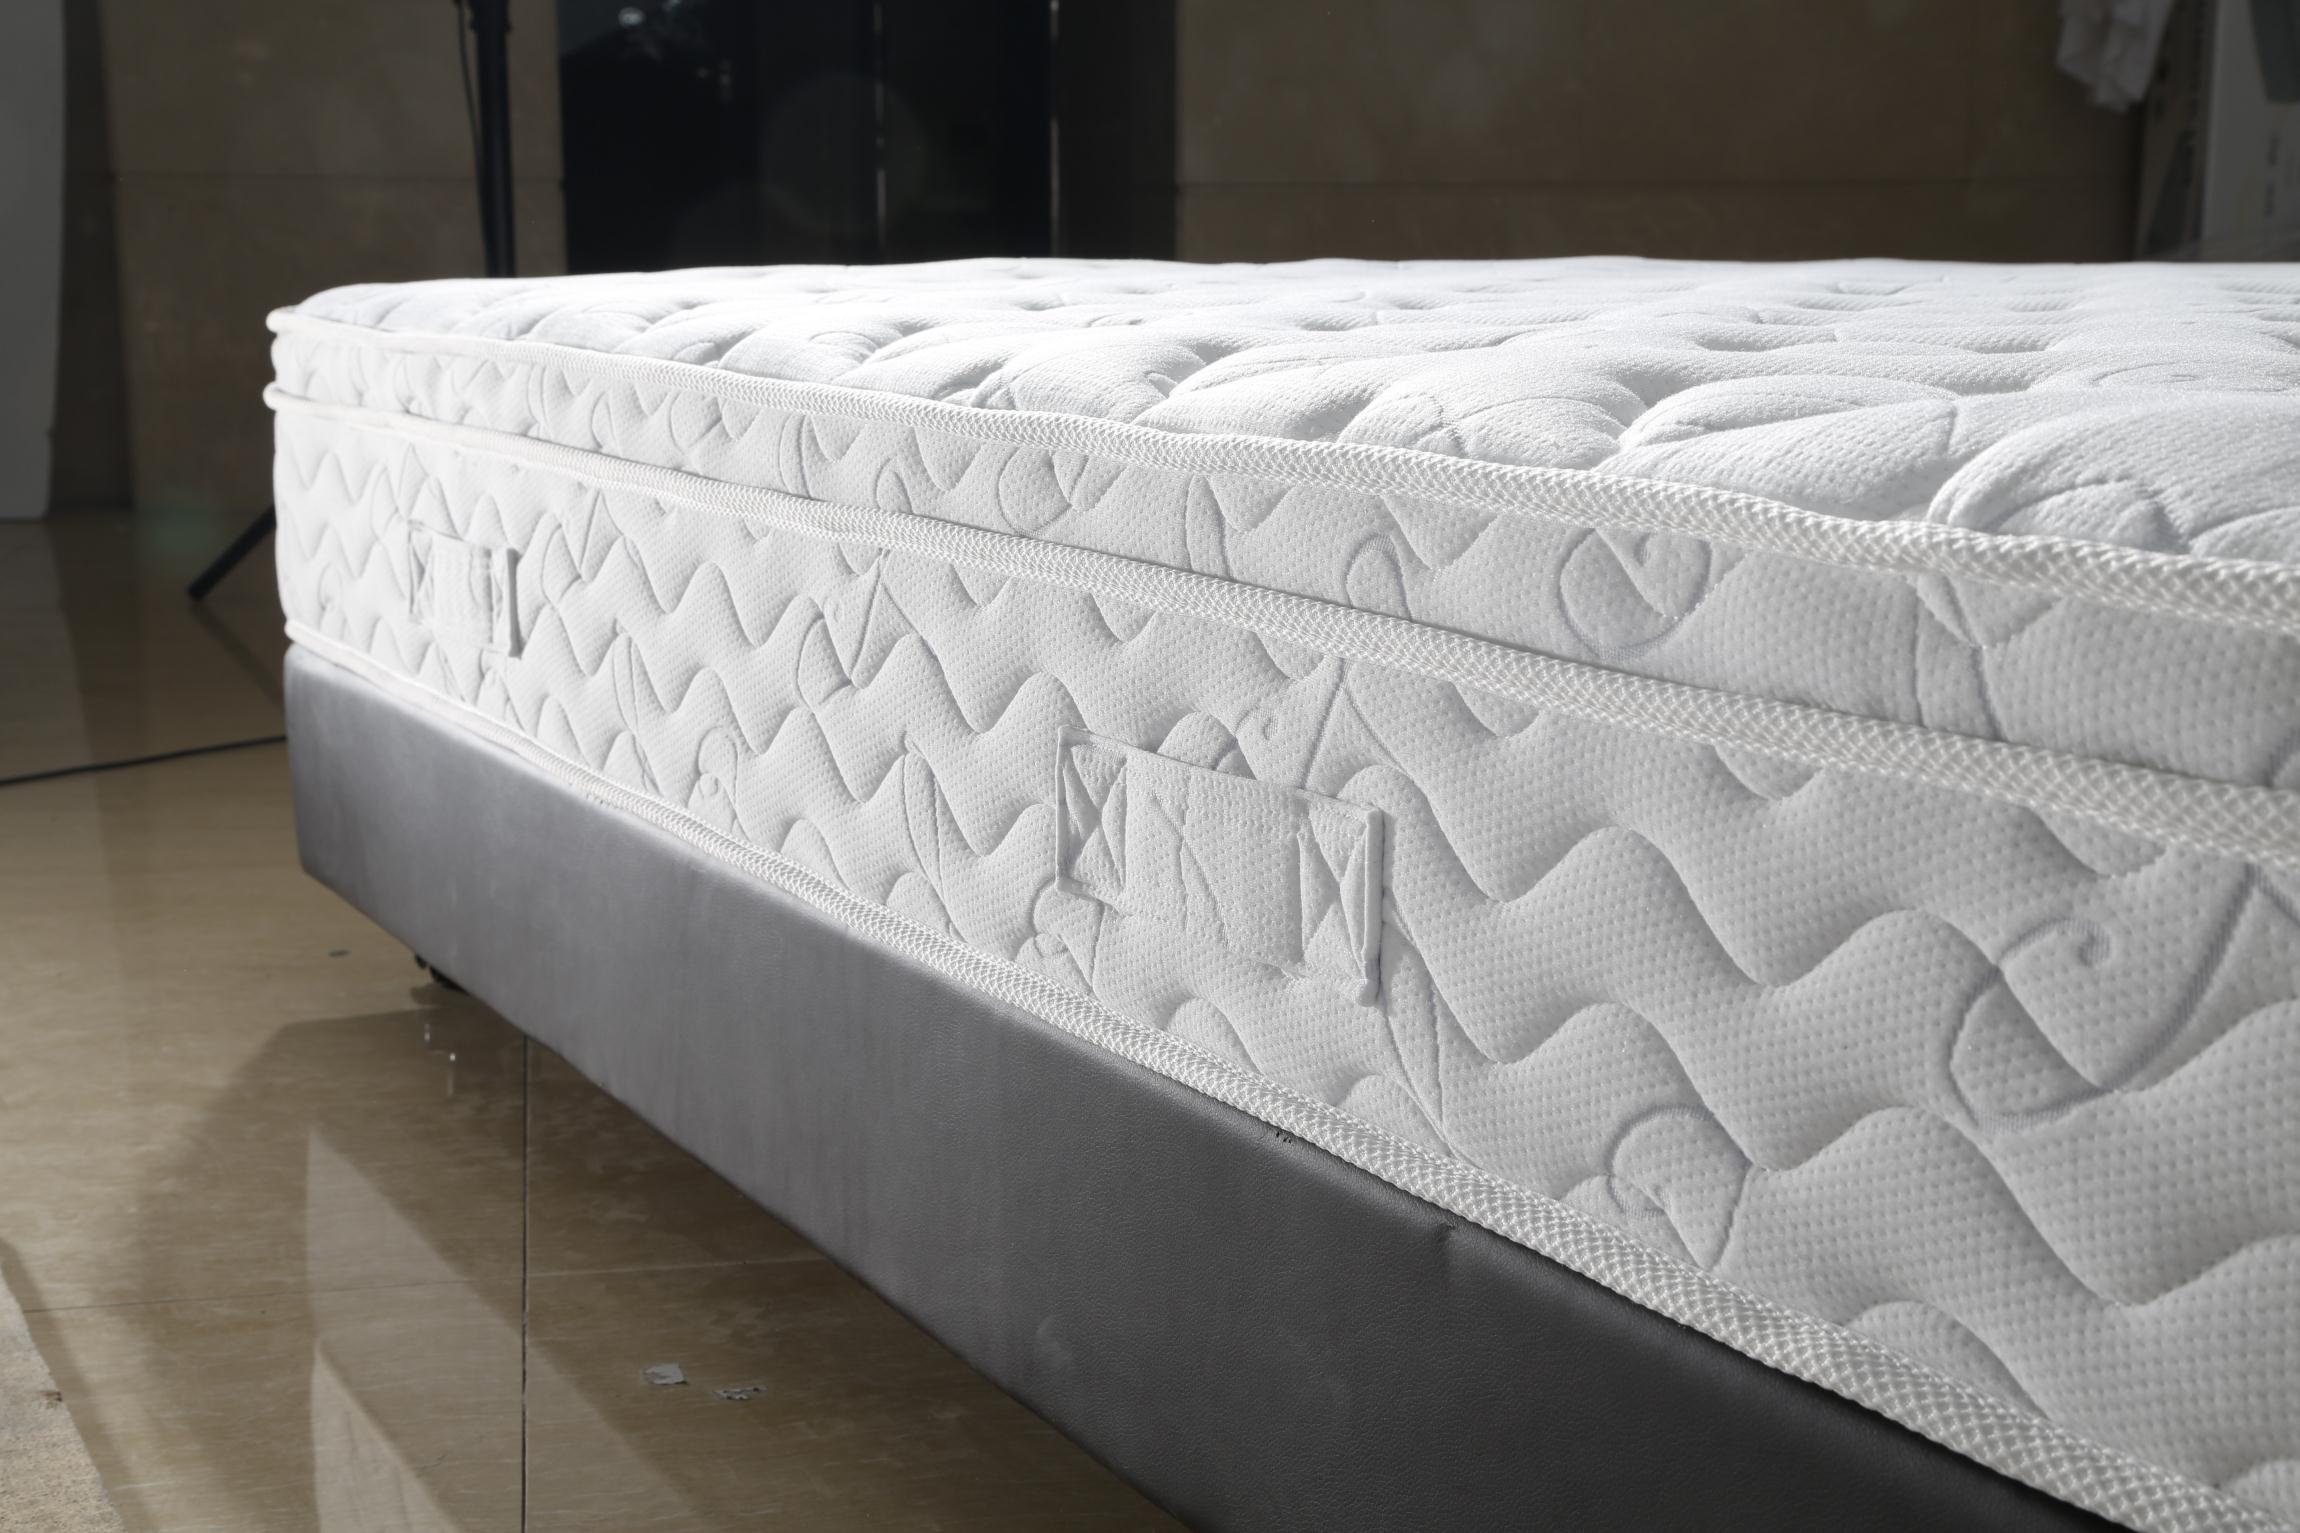 shopt hotel mattress full size